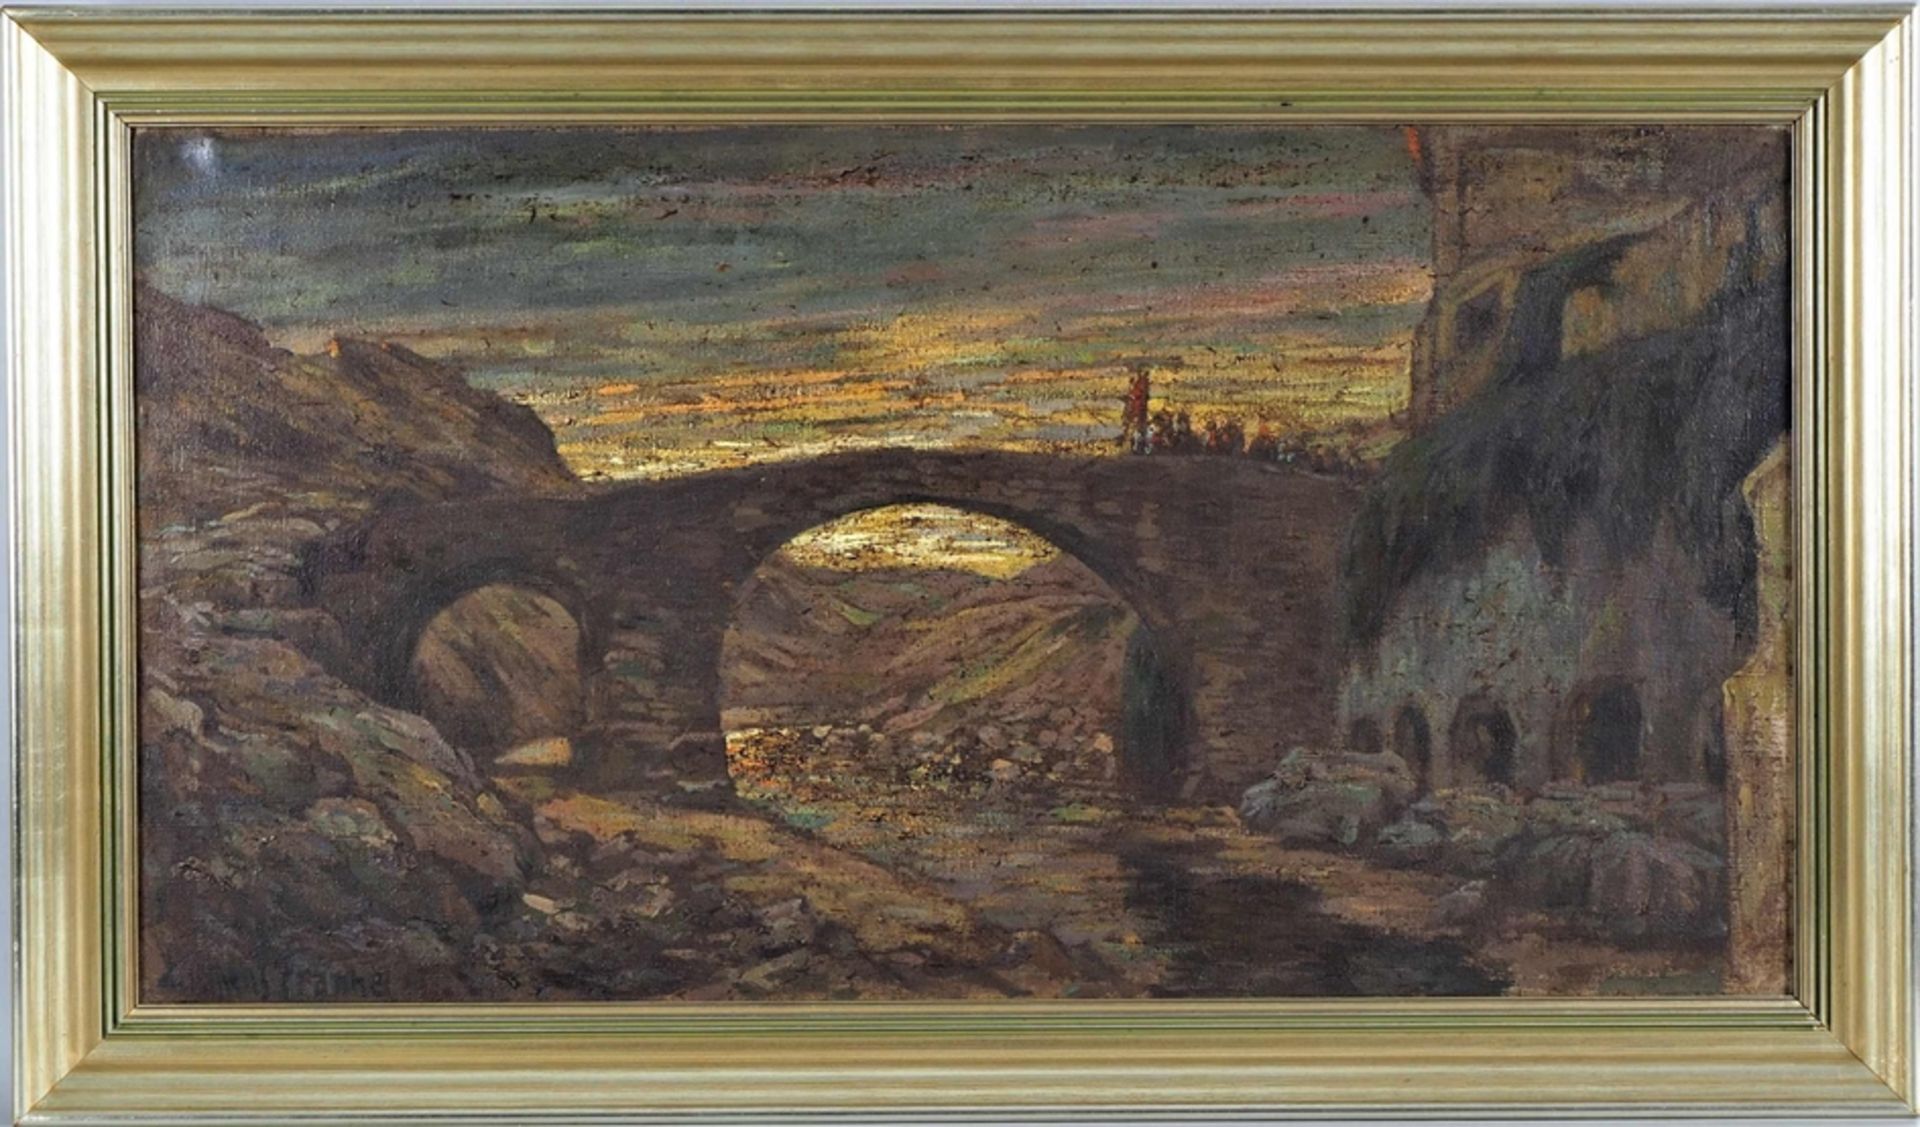 Clemens Fränkel (1872, Frankfurt am Main - 1944, wohl Auschwitz) - Brücke bei Sonnenuntergang